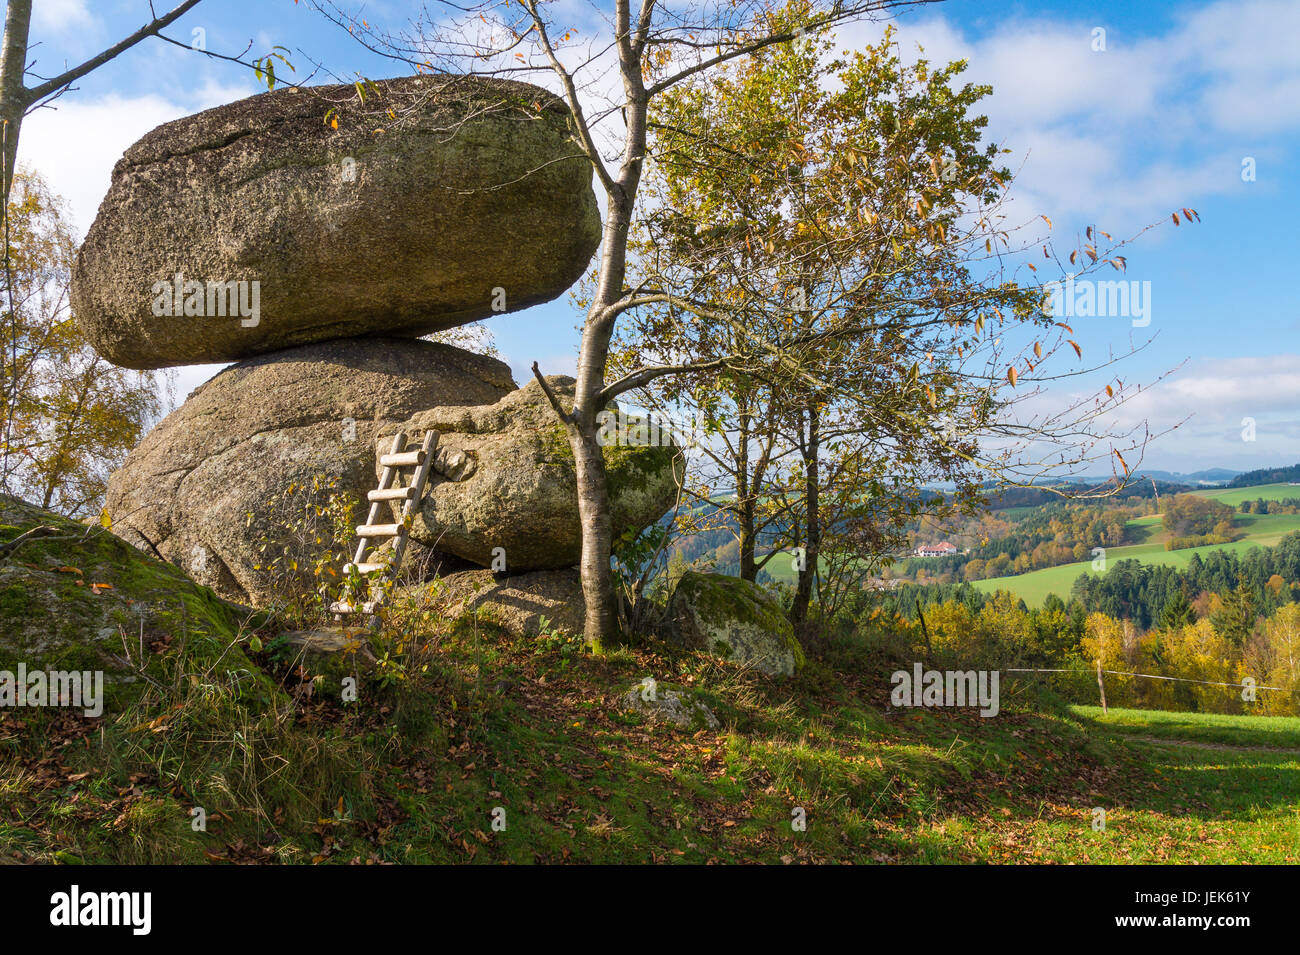 logan or balanced rock Schwammerling Stock Photo